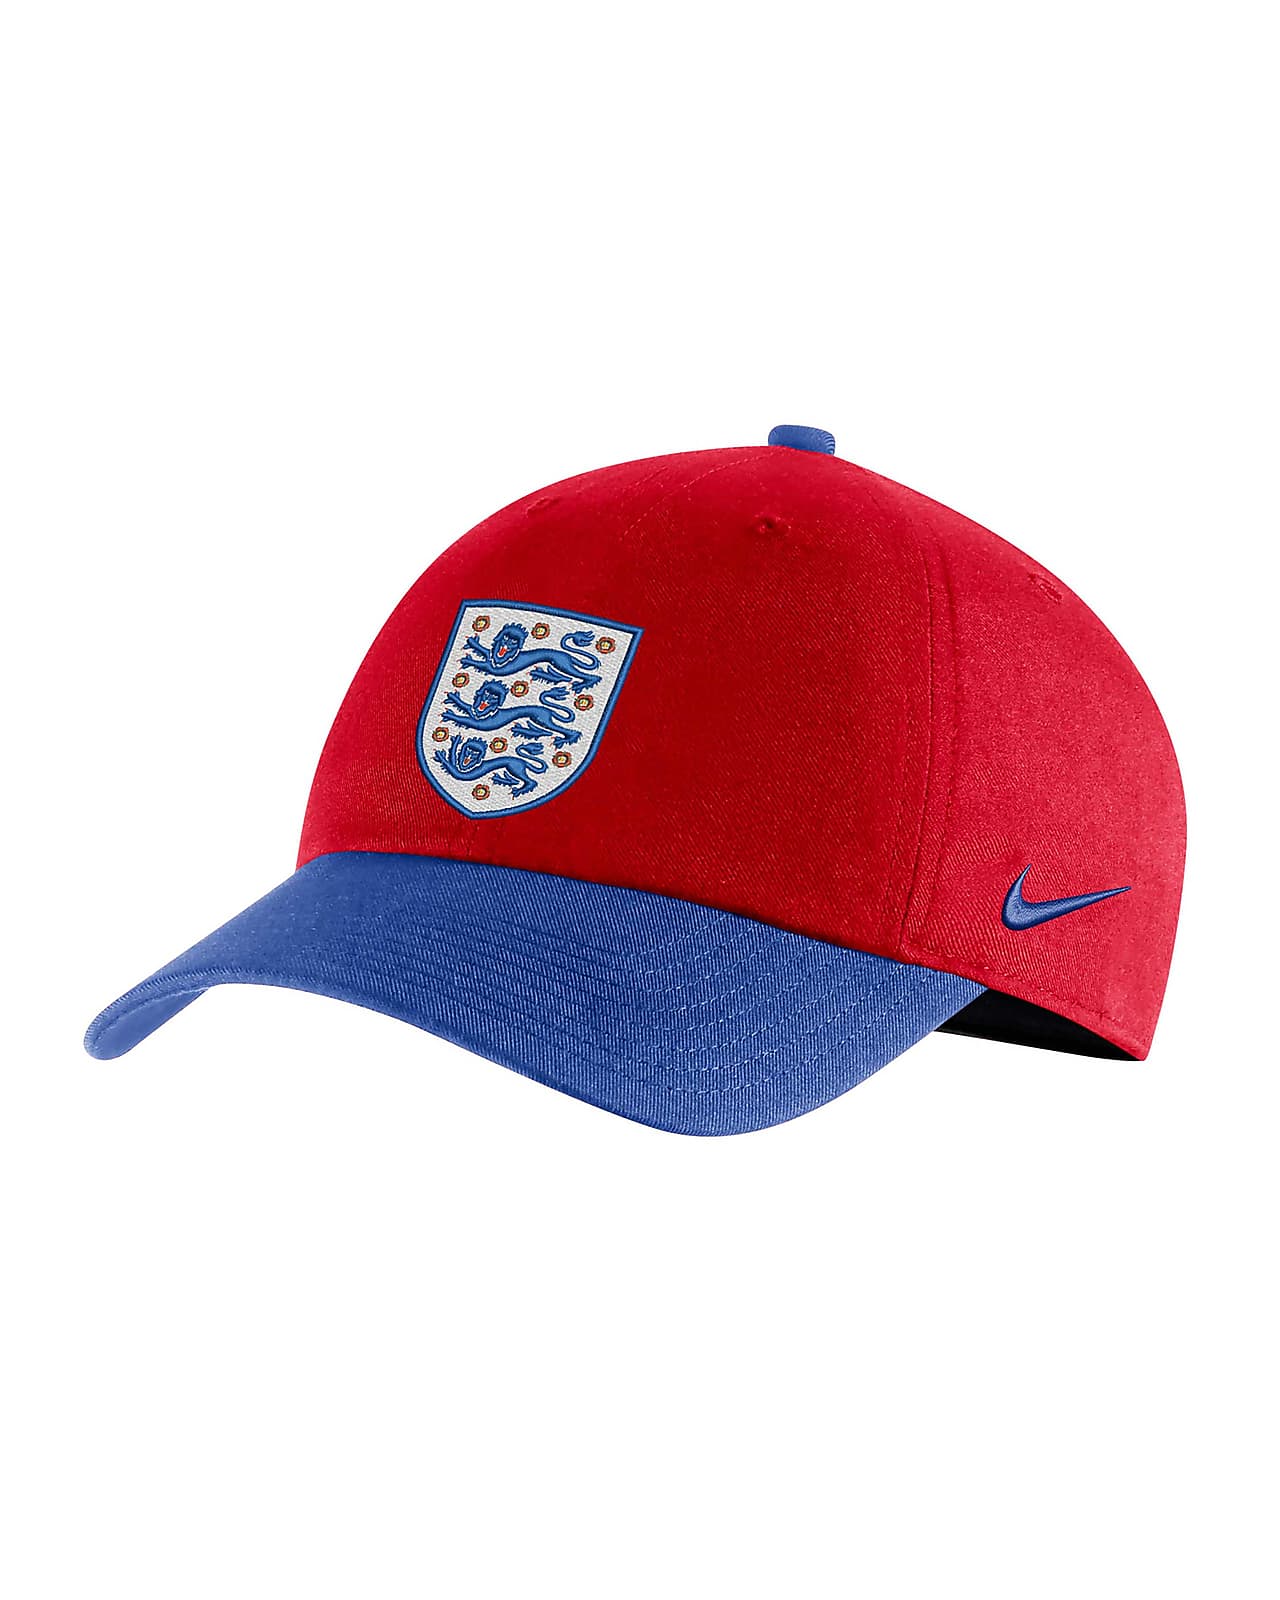 England Heritage86 Men's Adjustable Hat.